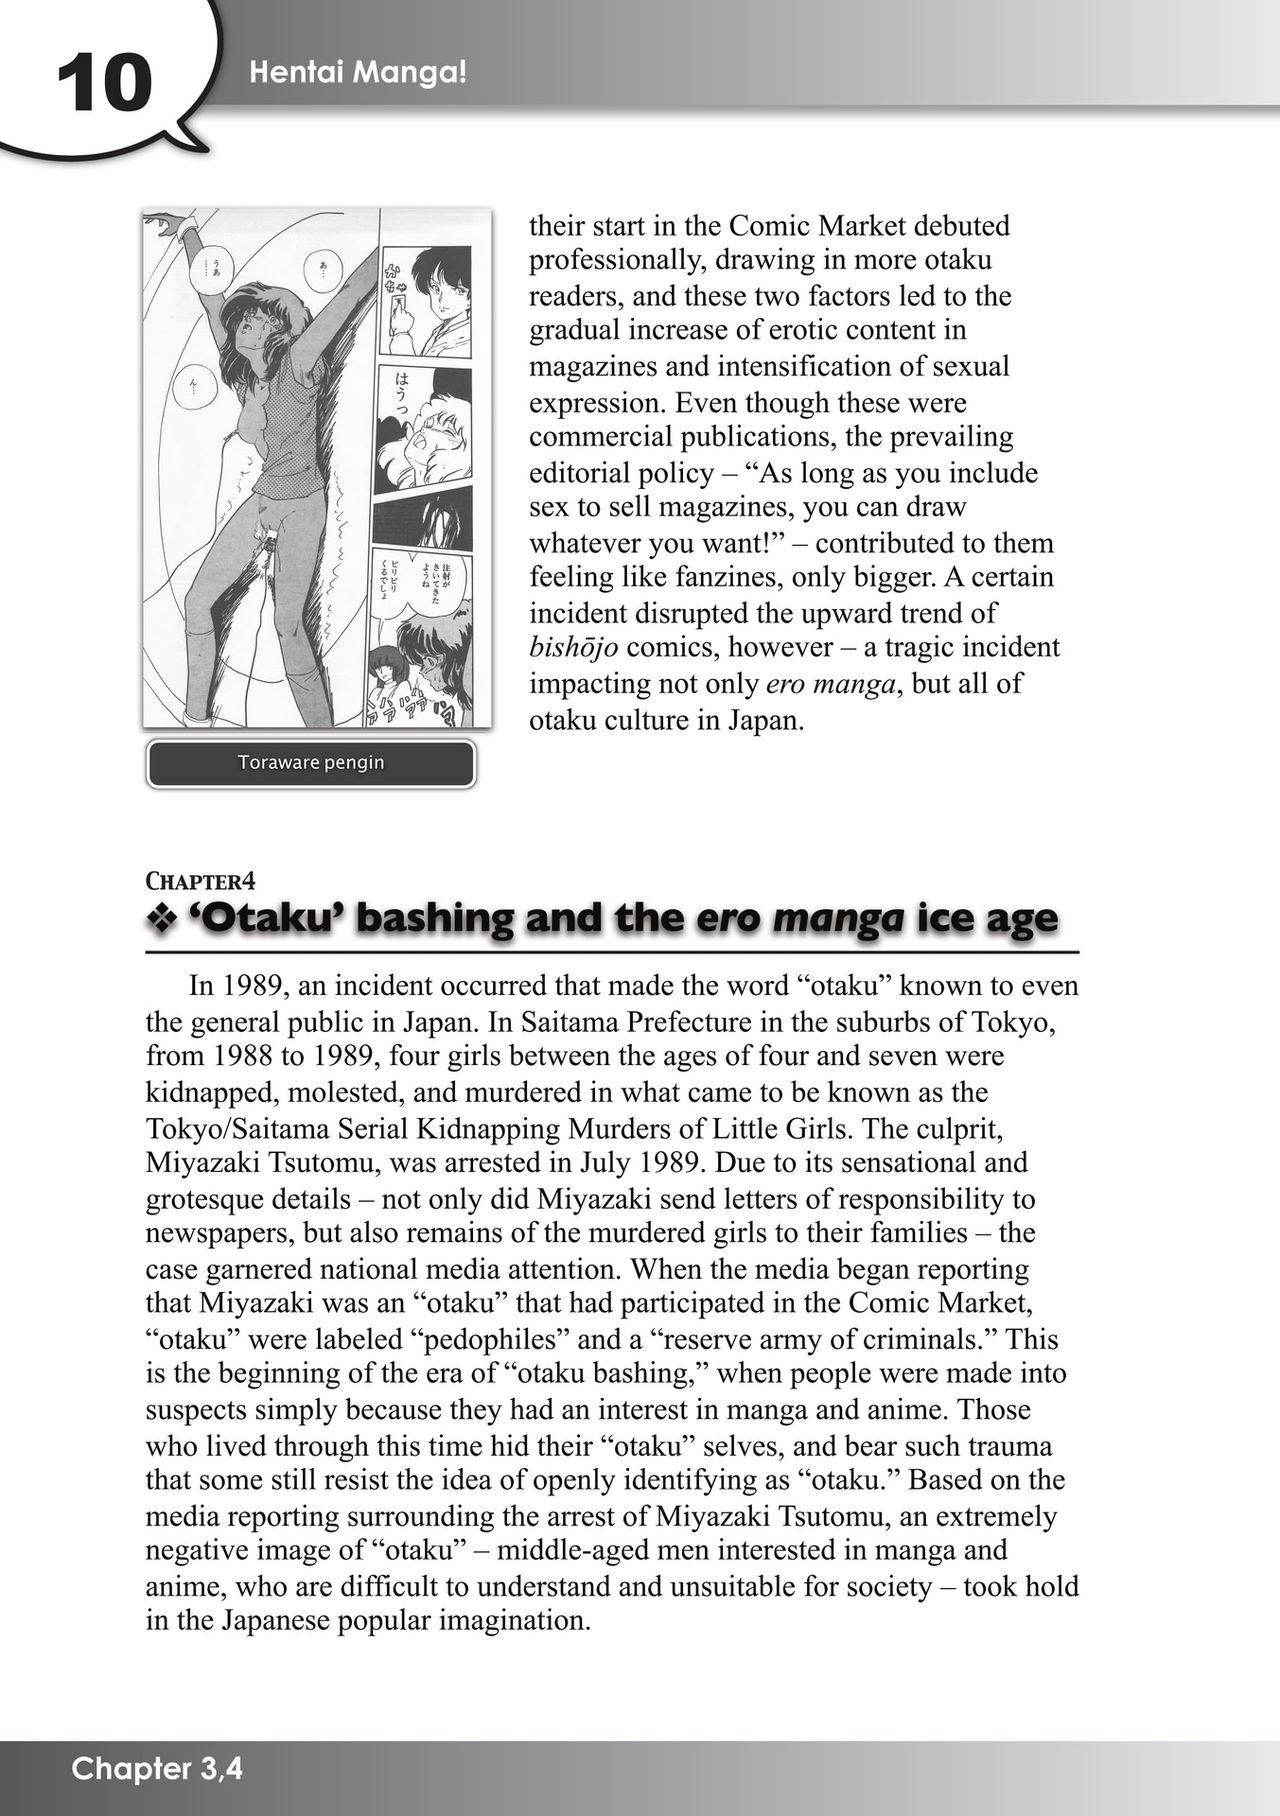 Hentai Manga! A Brief History of Pornographic Comics in Japan 10